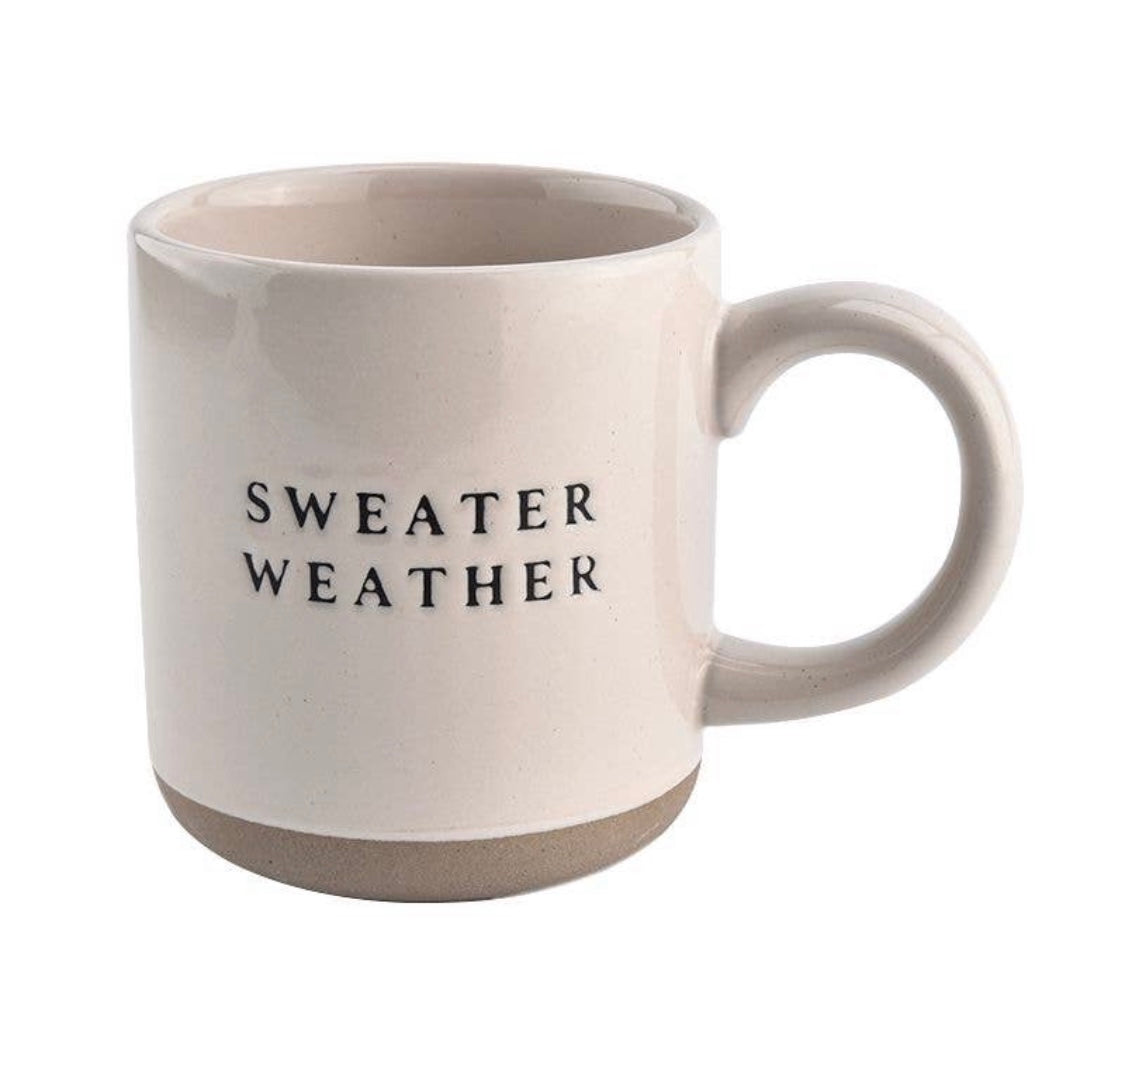 Sweater Weather mug